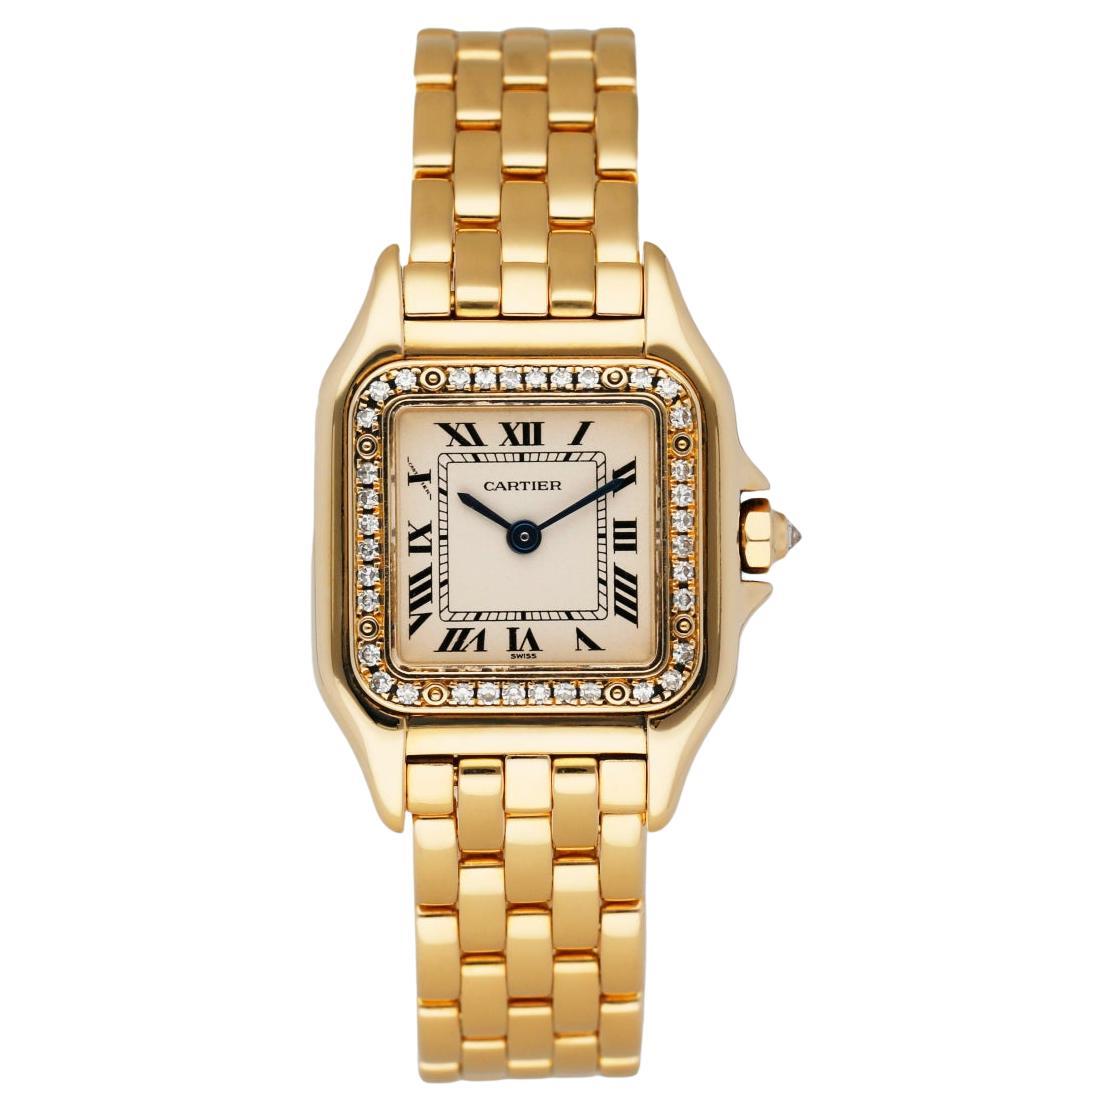 Cartier Panthere WF3070B9 1280 18K Yellow Gold Diamonds Ladies Watch